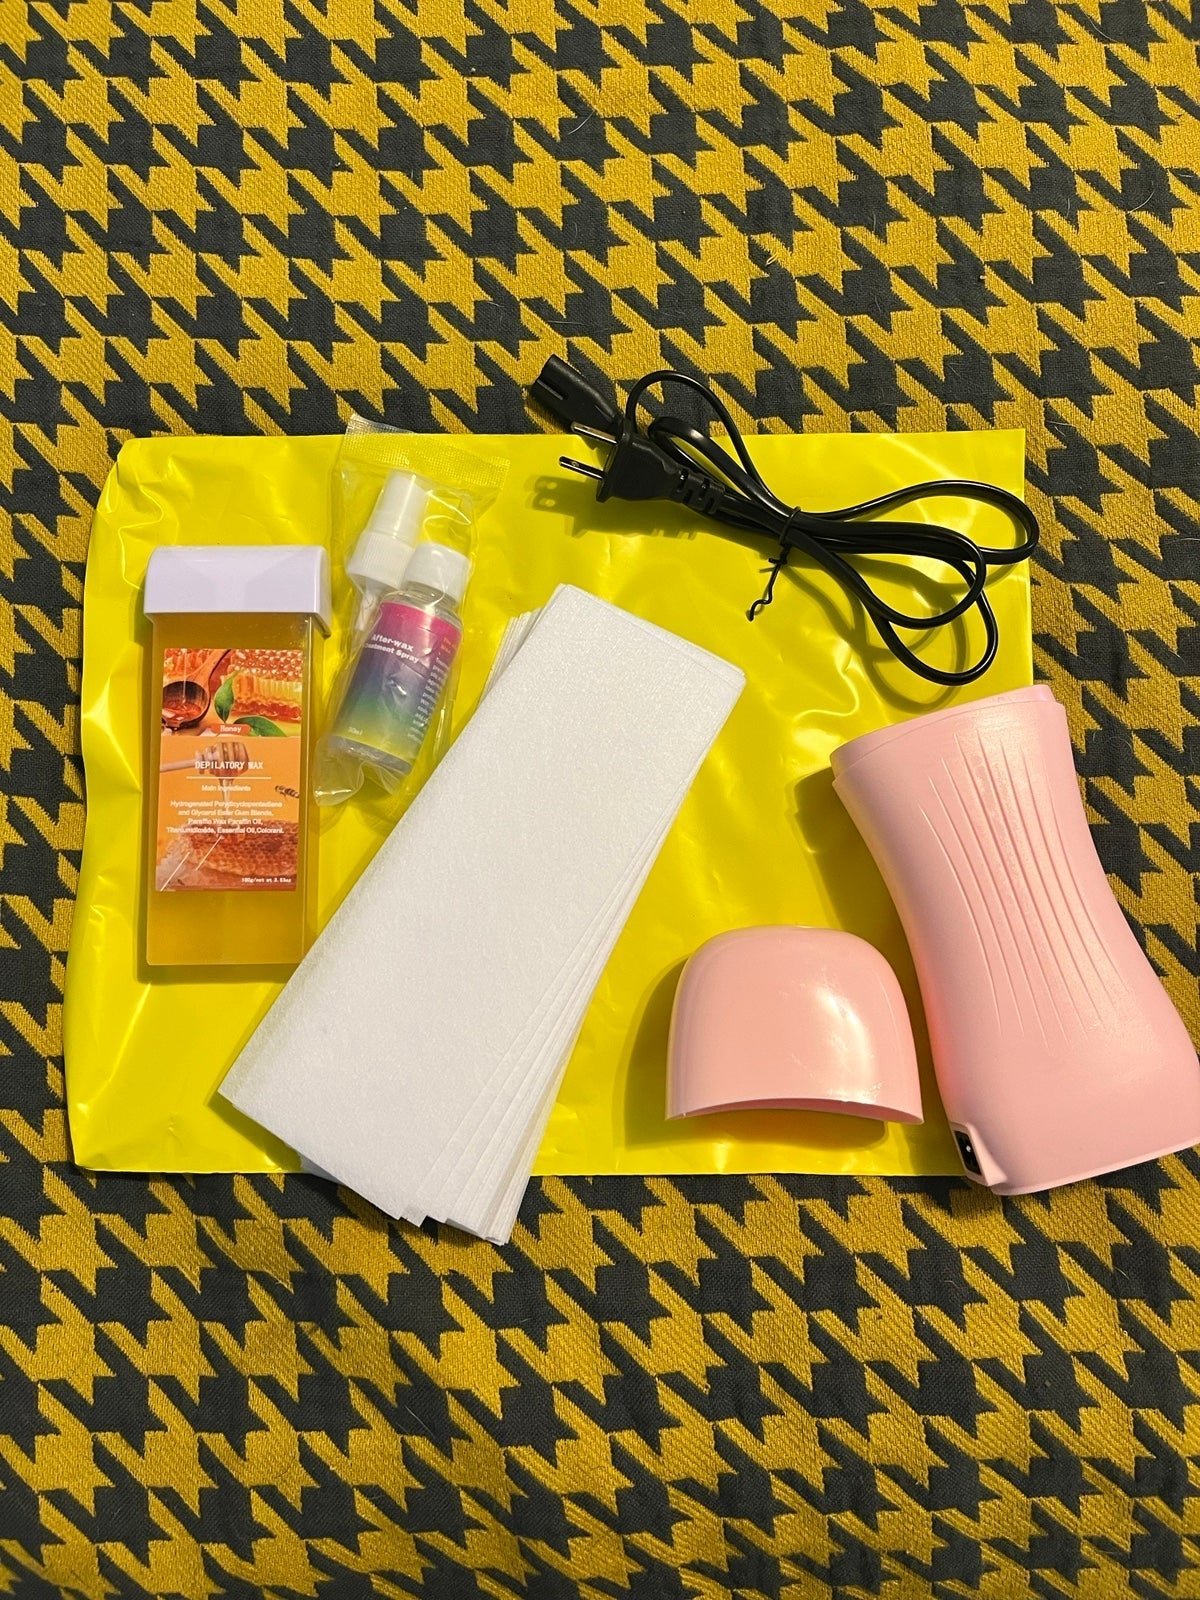 Roll On Wax Kit: Honey Wax Pink Cartridge Warmer Wax Strips for Hair Removal DDgXBVsGV